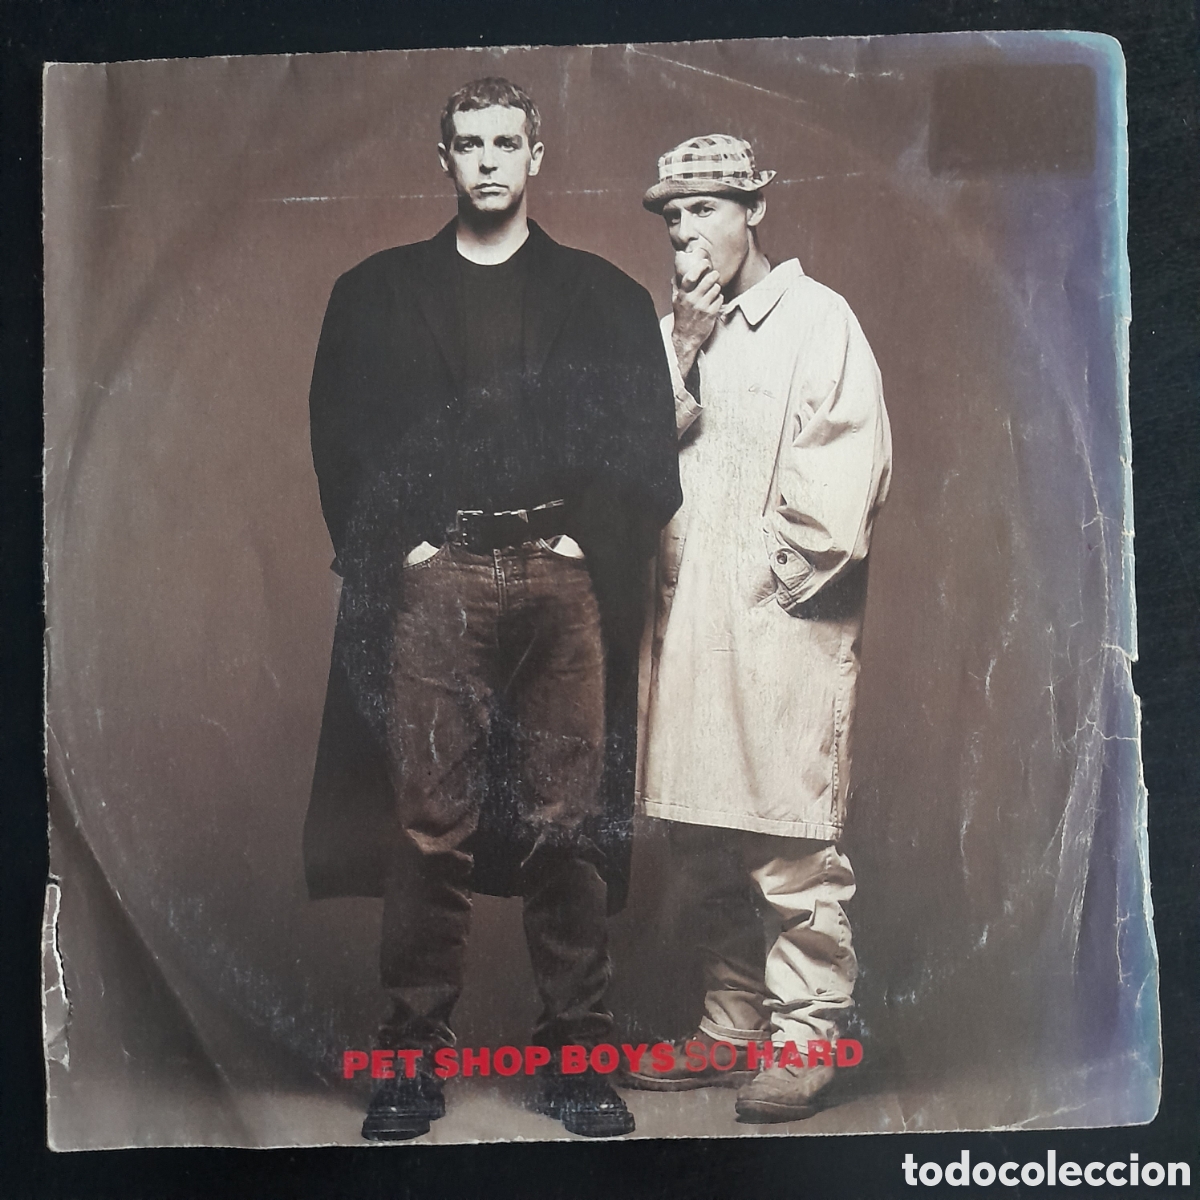 Pet Shop Boys - So Hard 